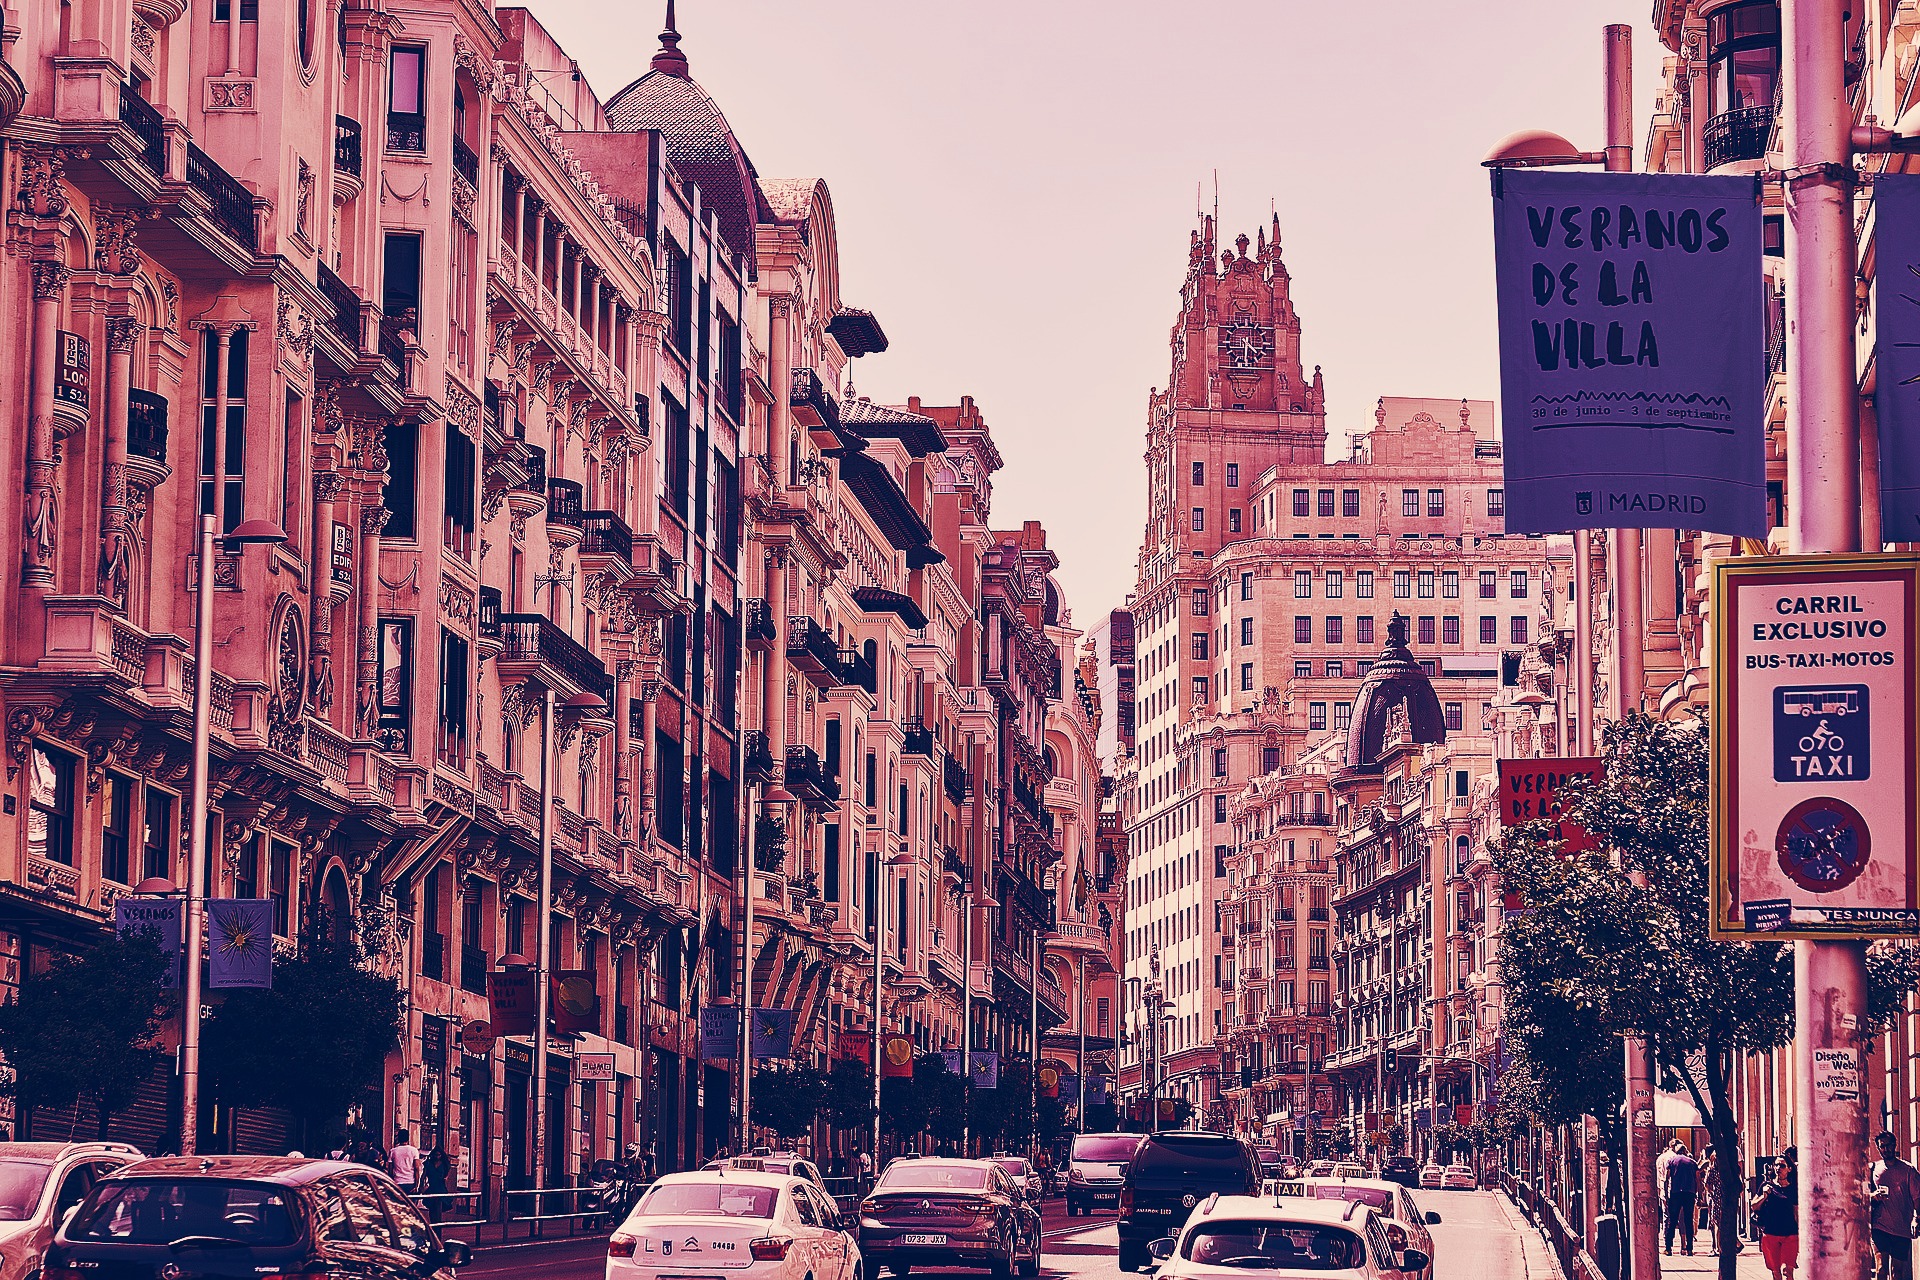 Madrid streets | Source: Pixabay